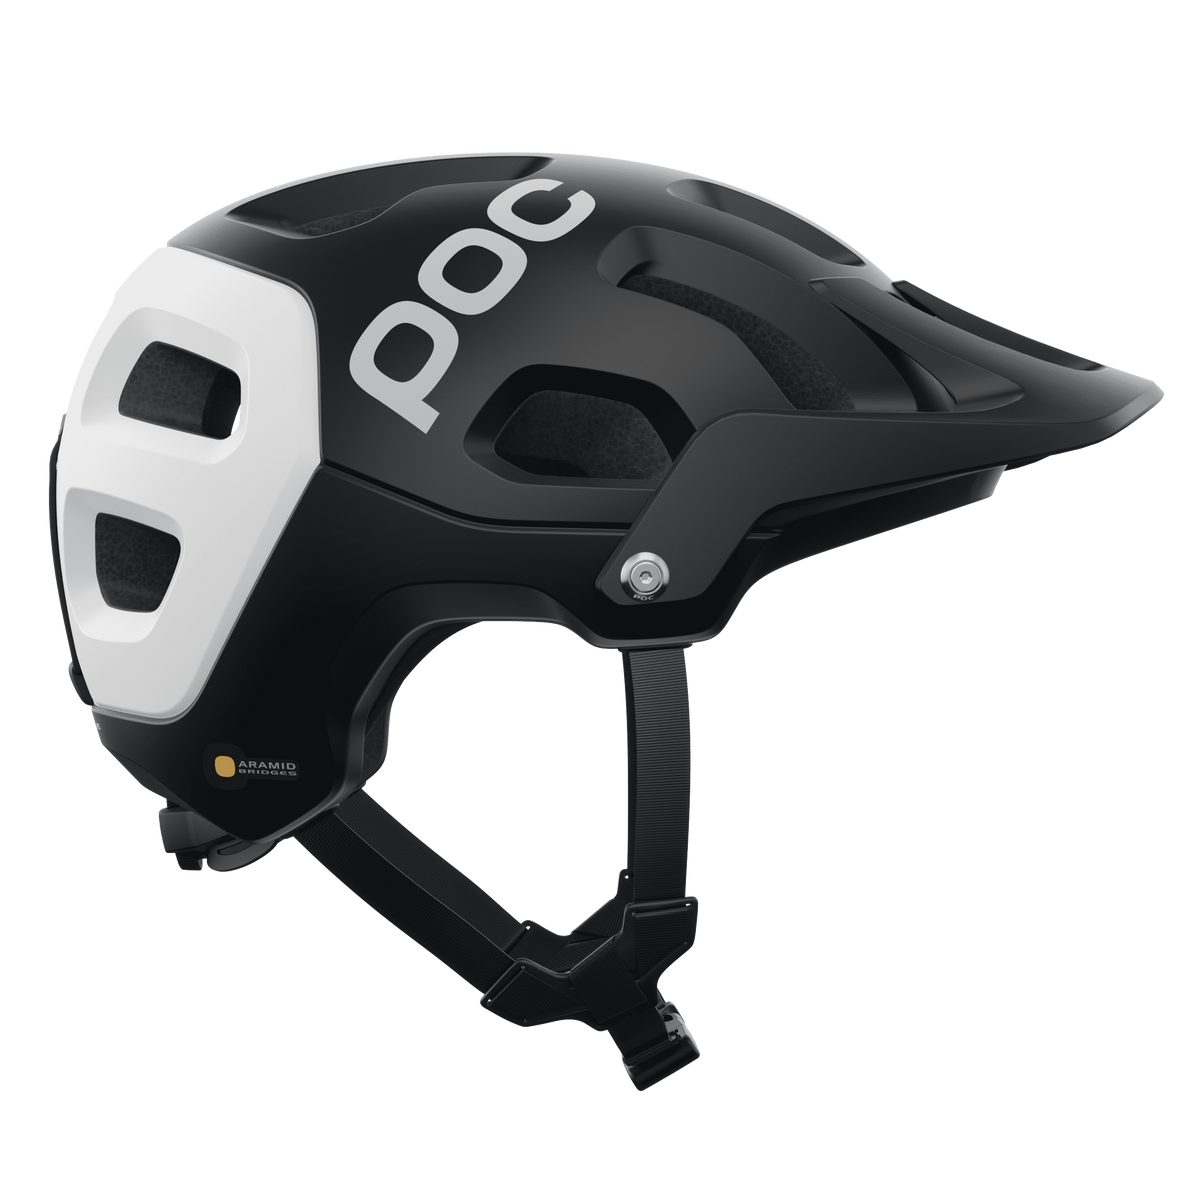 POC Tectal Race MIPS Helmet, 2022 - Cycle Closet